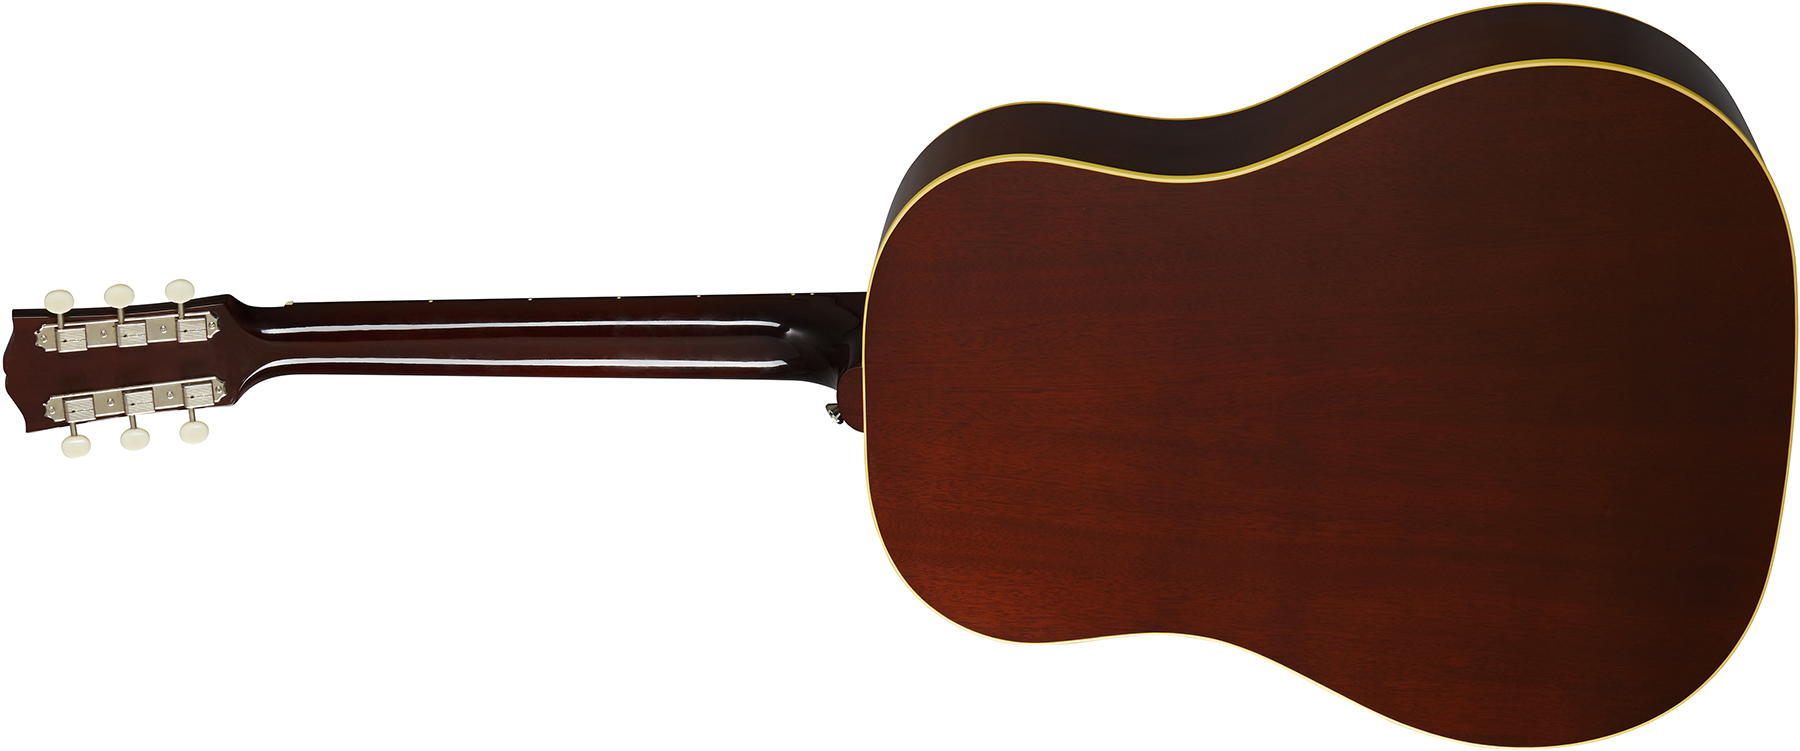 Gibson 50s J-50 Original 2020 Epicea Acajou Rw - Antique Natural - Elektroakustische Gitarre - Variation 1